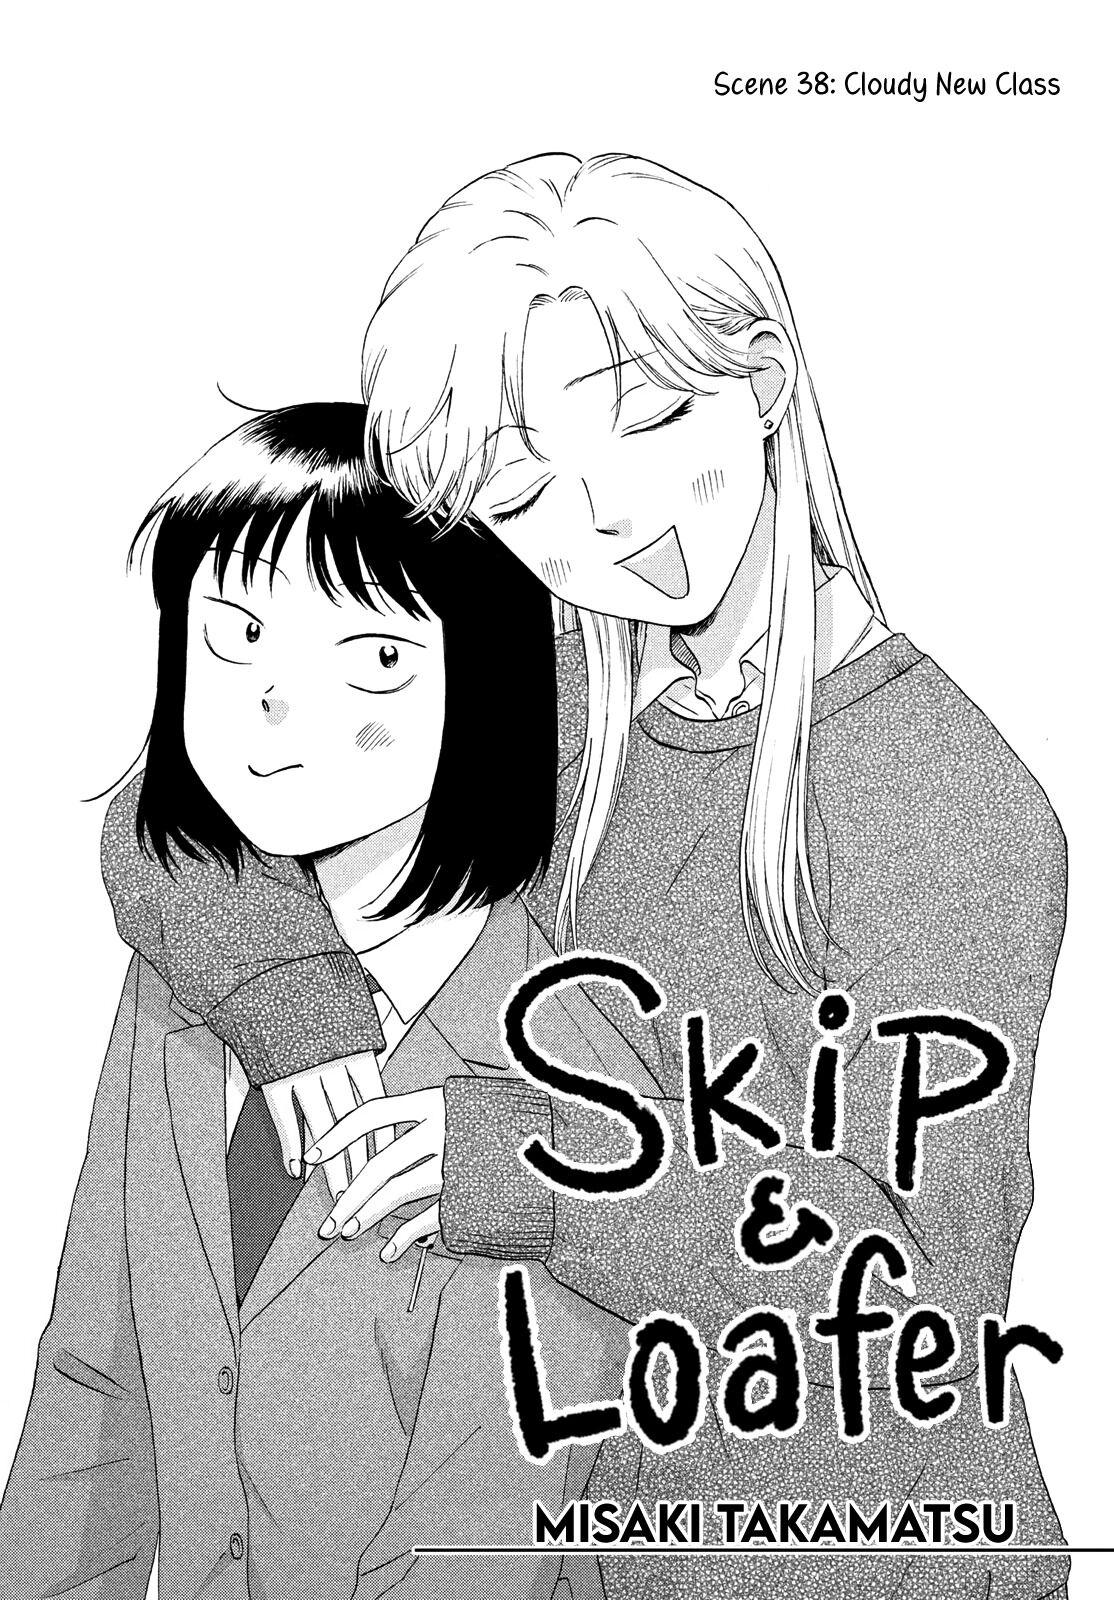 Skip and Loafer, Vol. 2 by Misaki Takamatsu